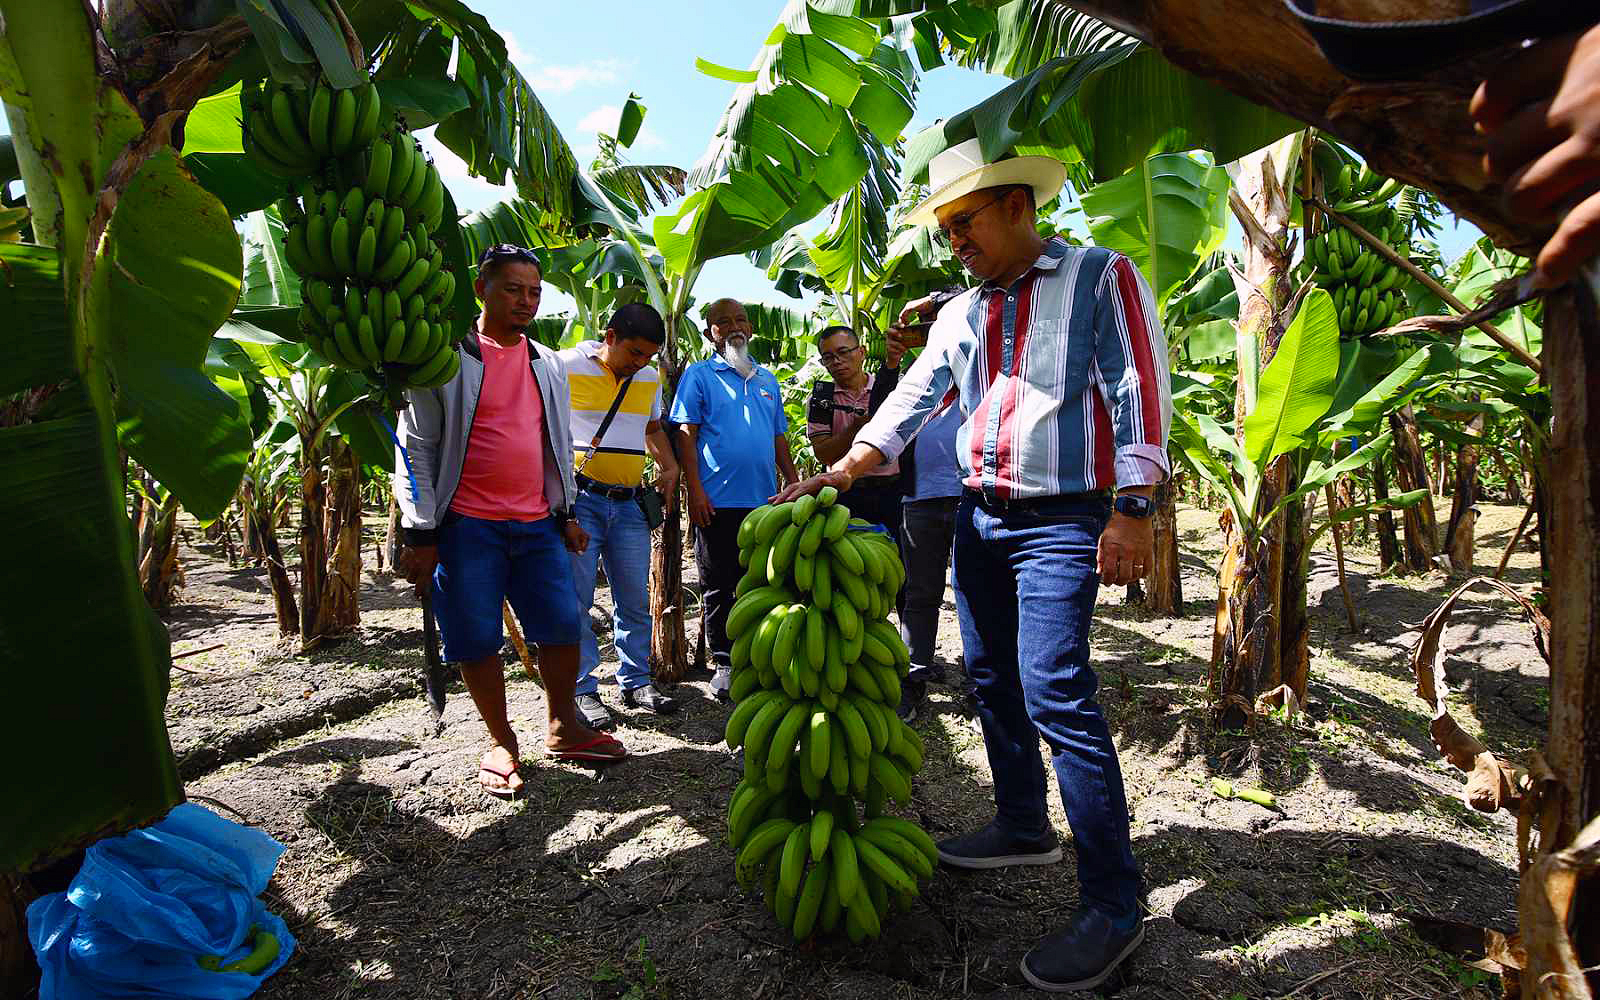 Banana farm in Laguna by JBondoc